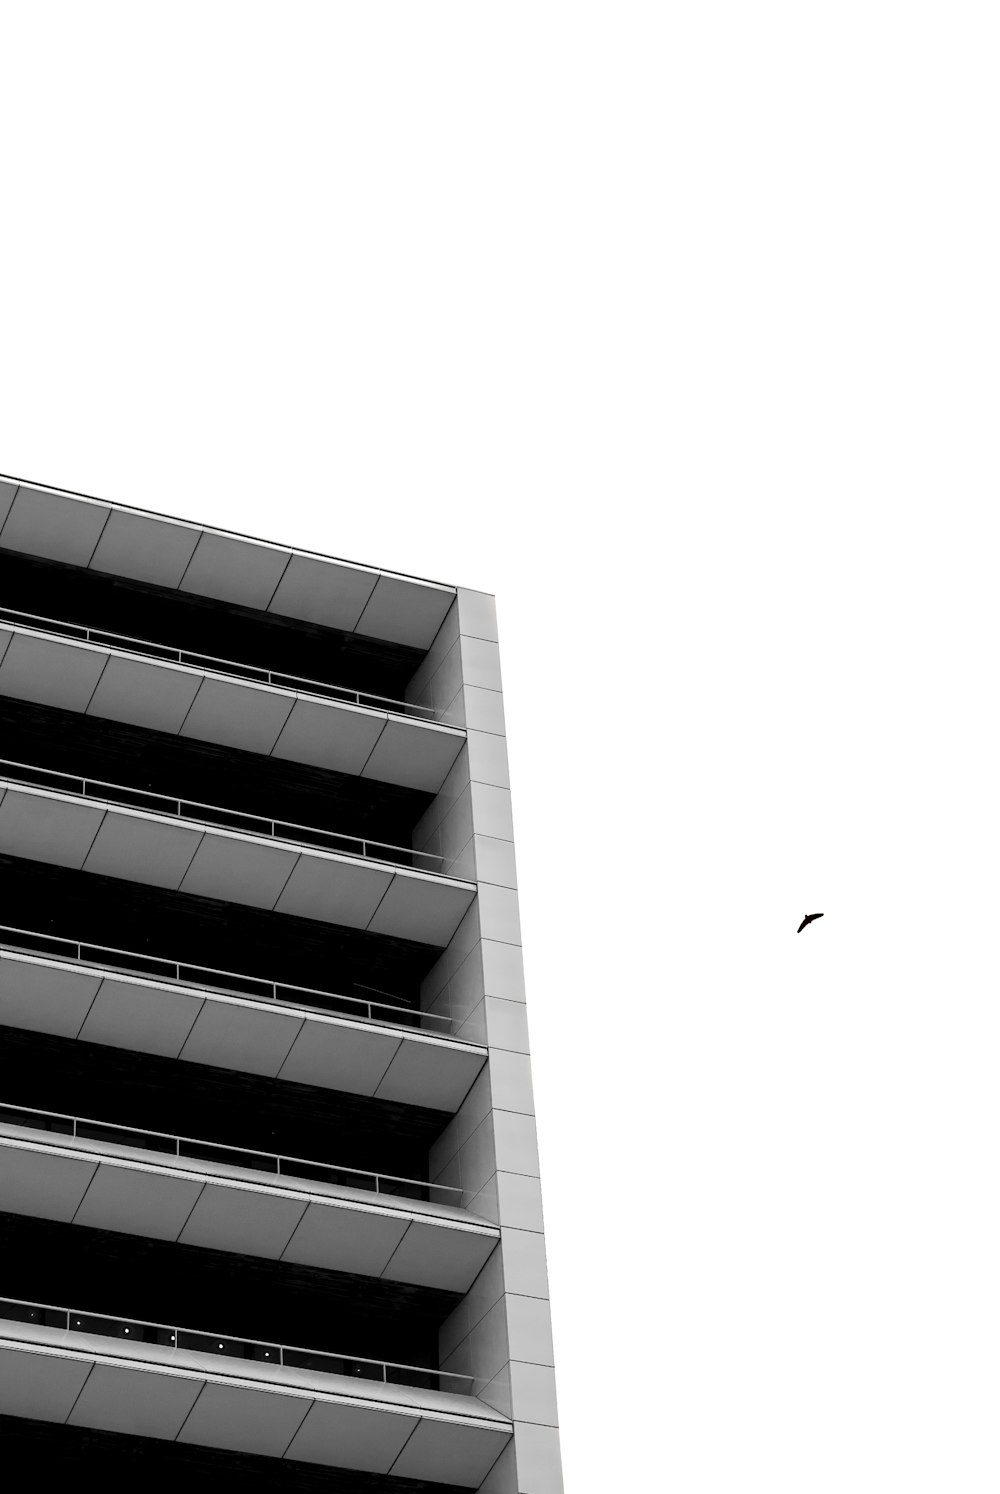 black bird flying over the building